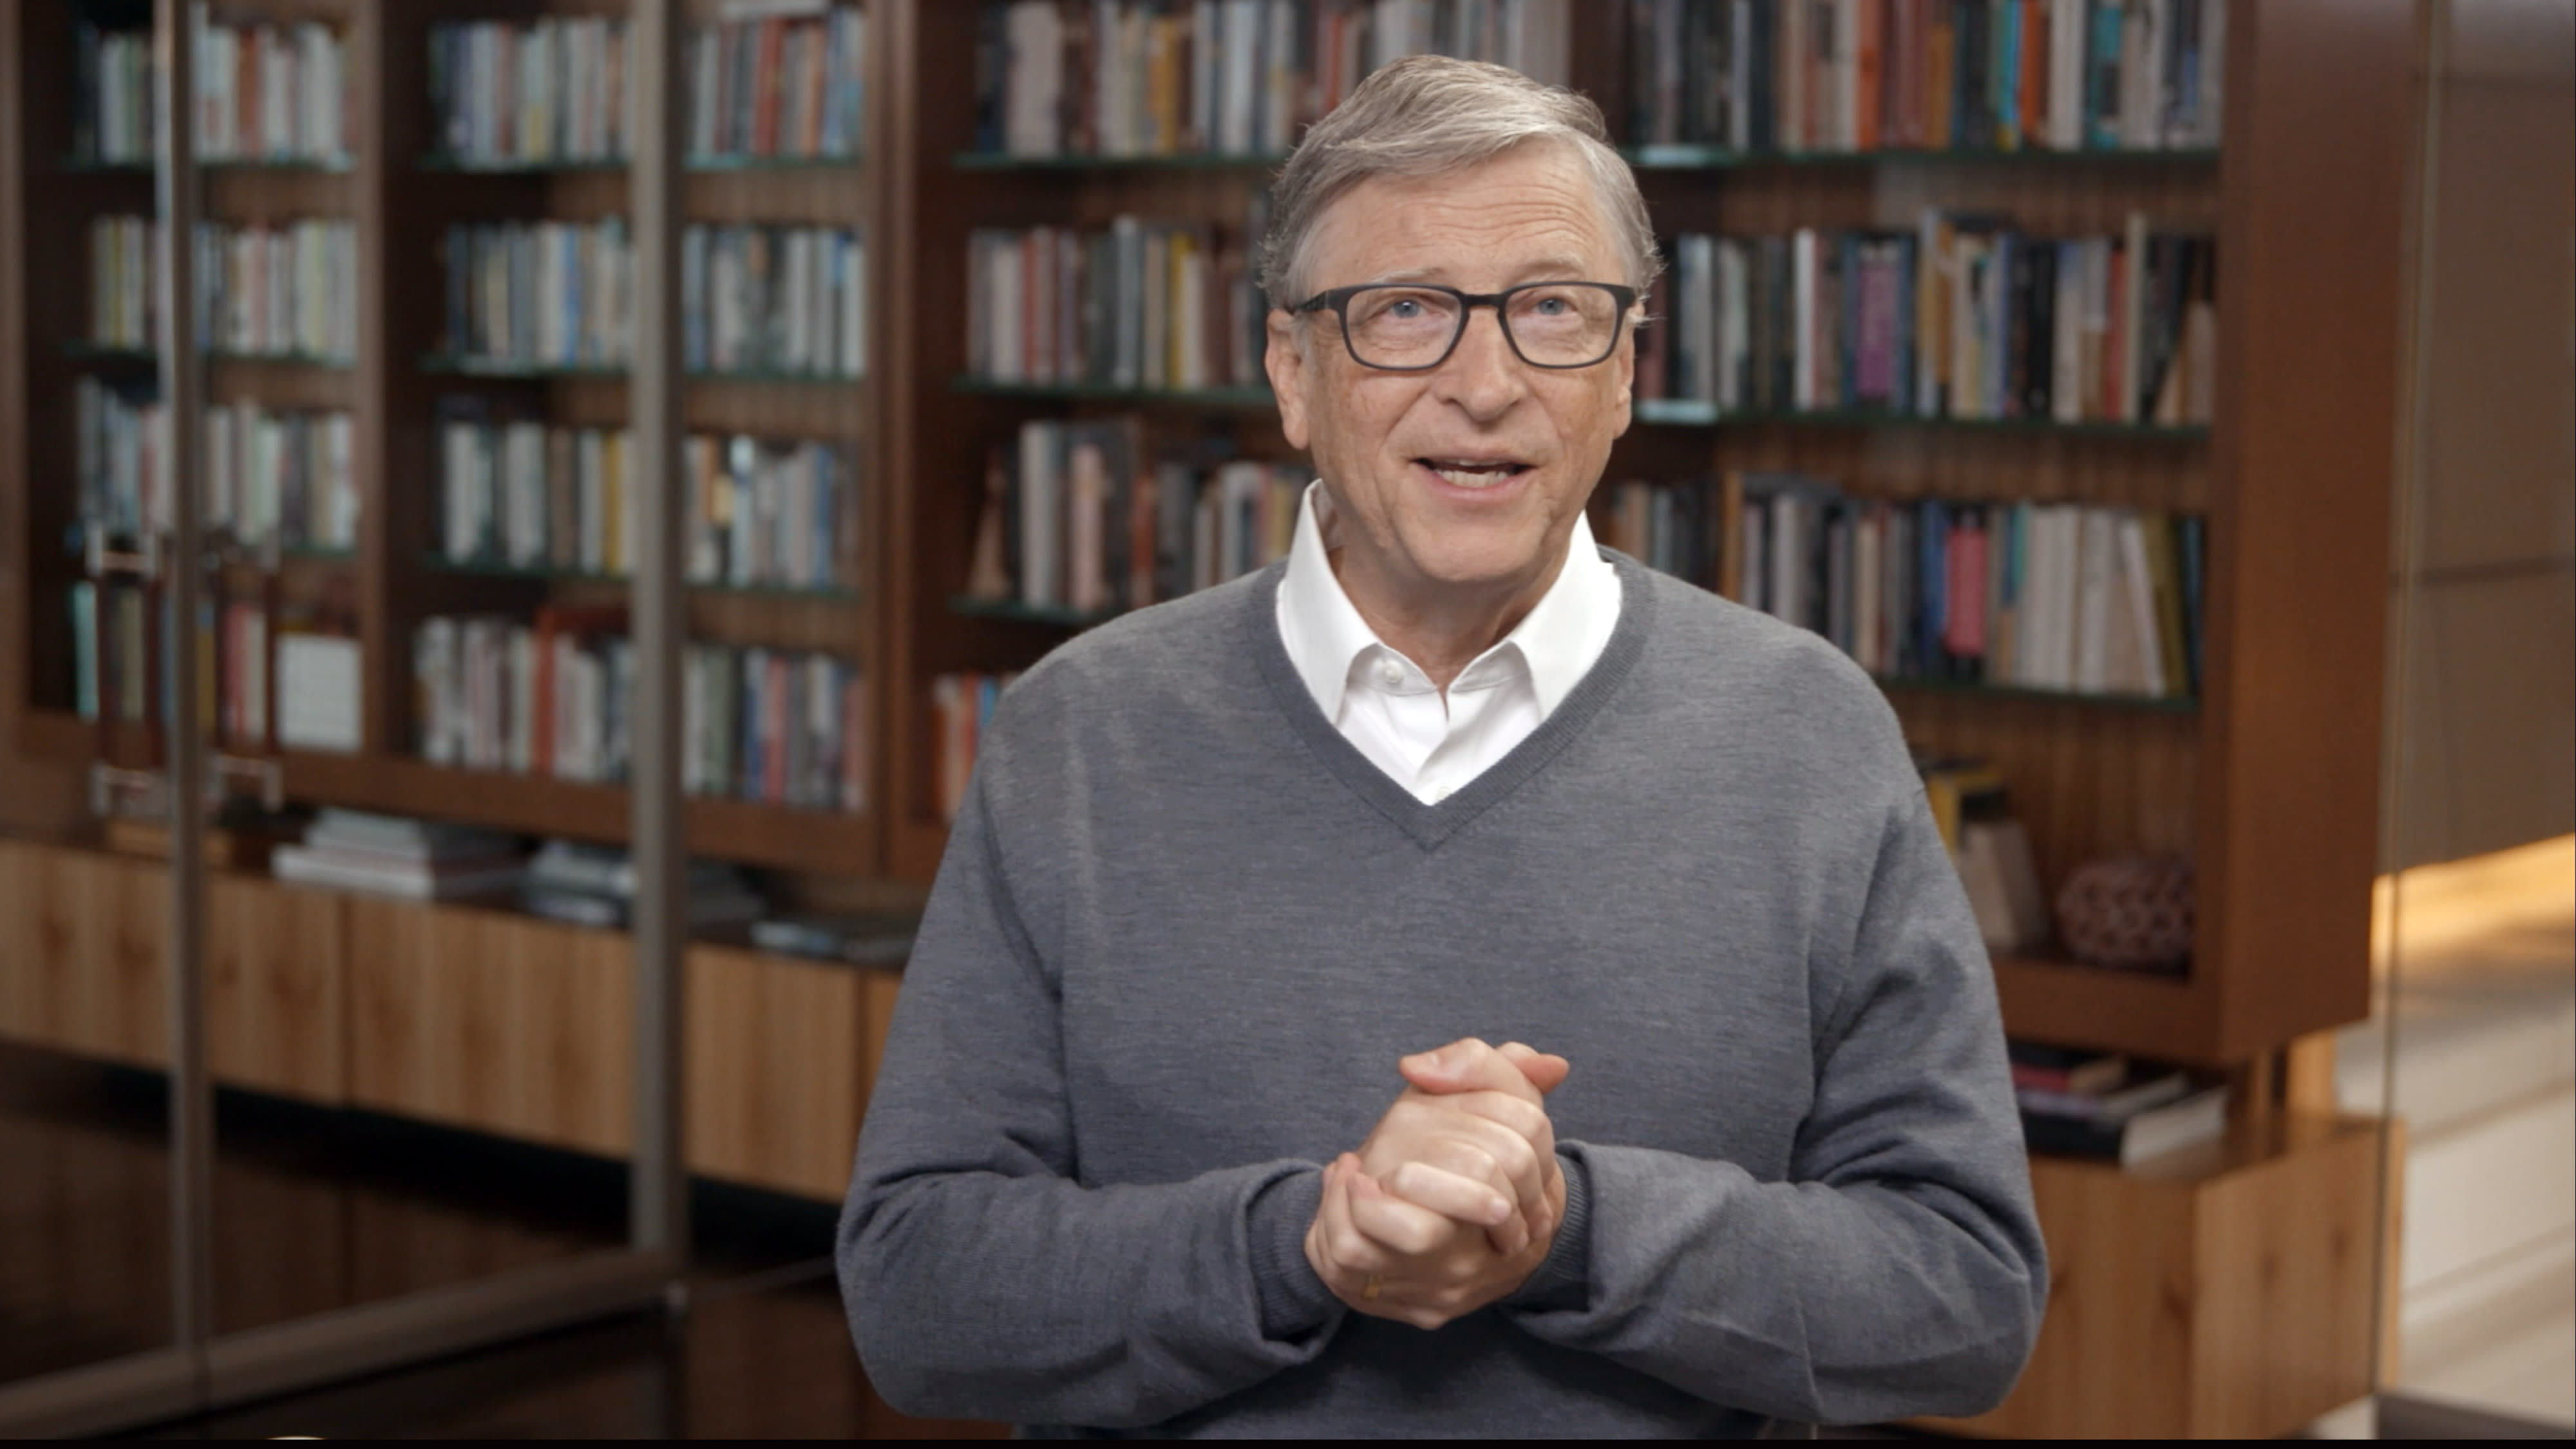 Bill Gates Reddit Ama Reading Habit That Is Key To My Learning